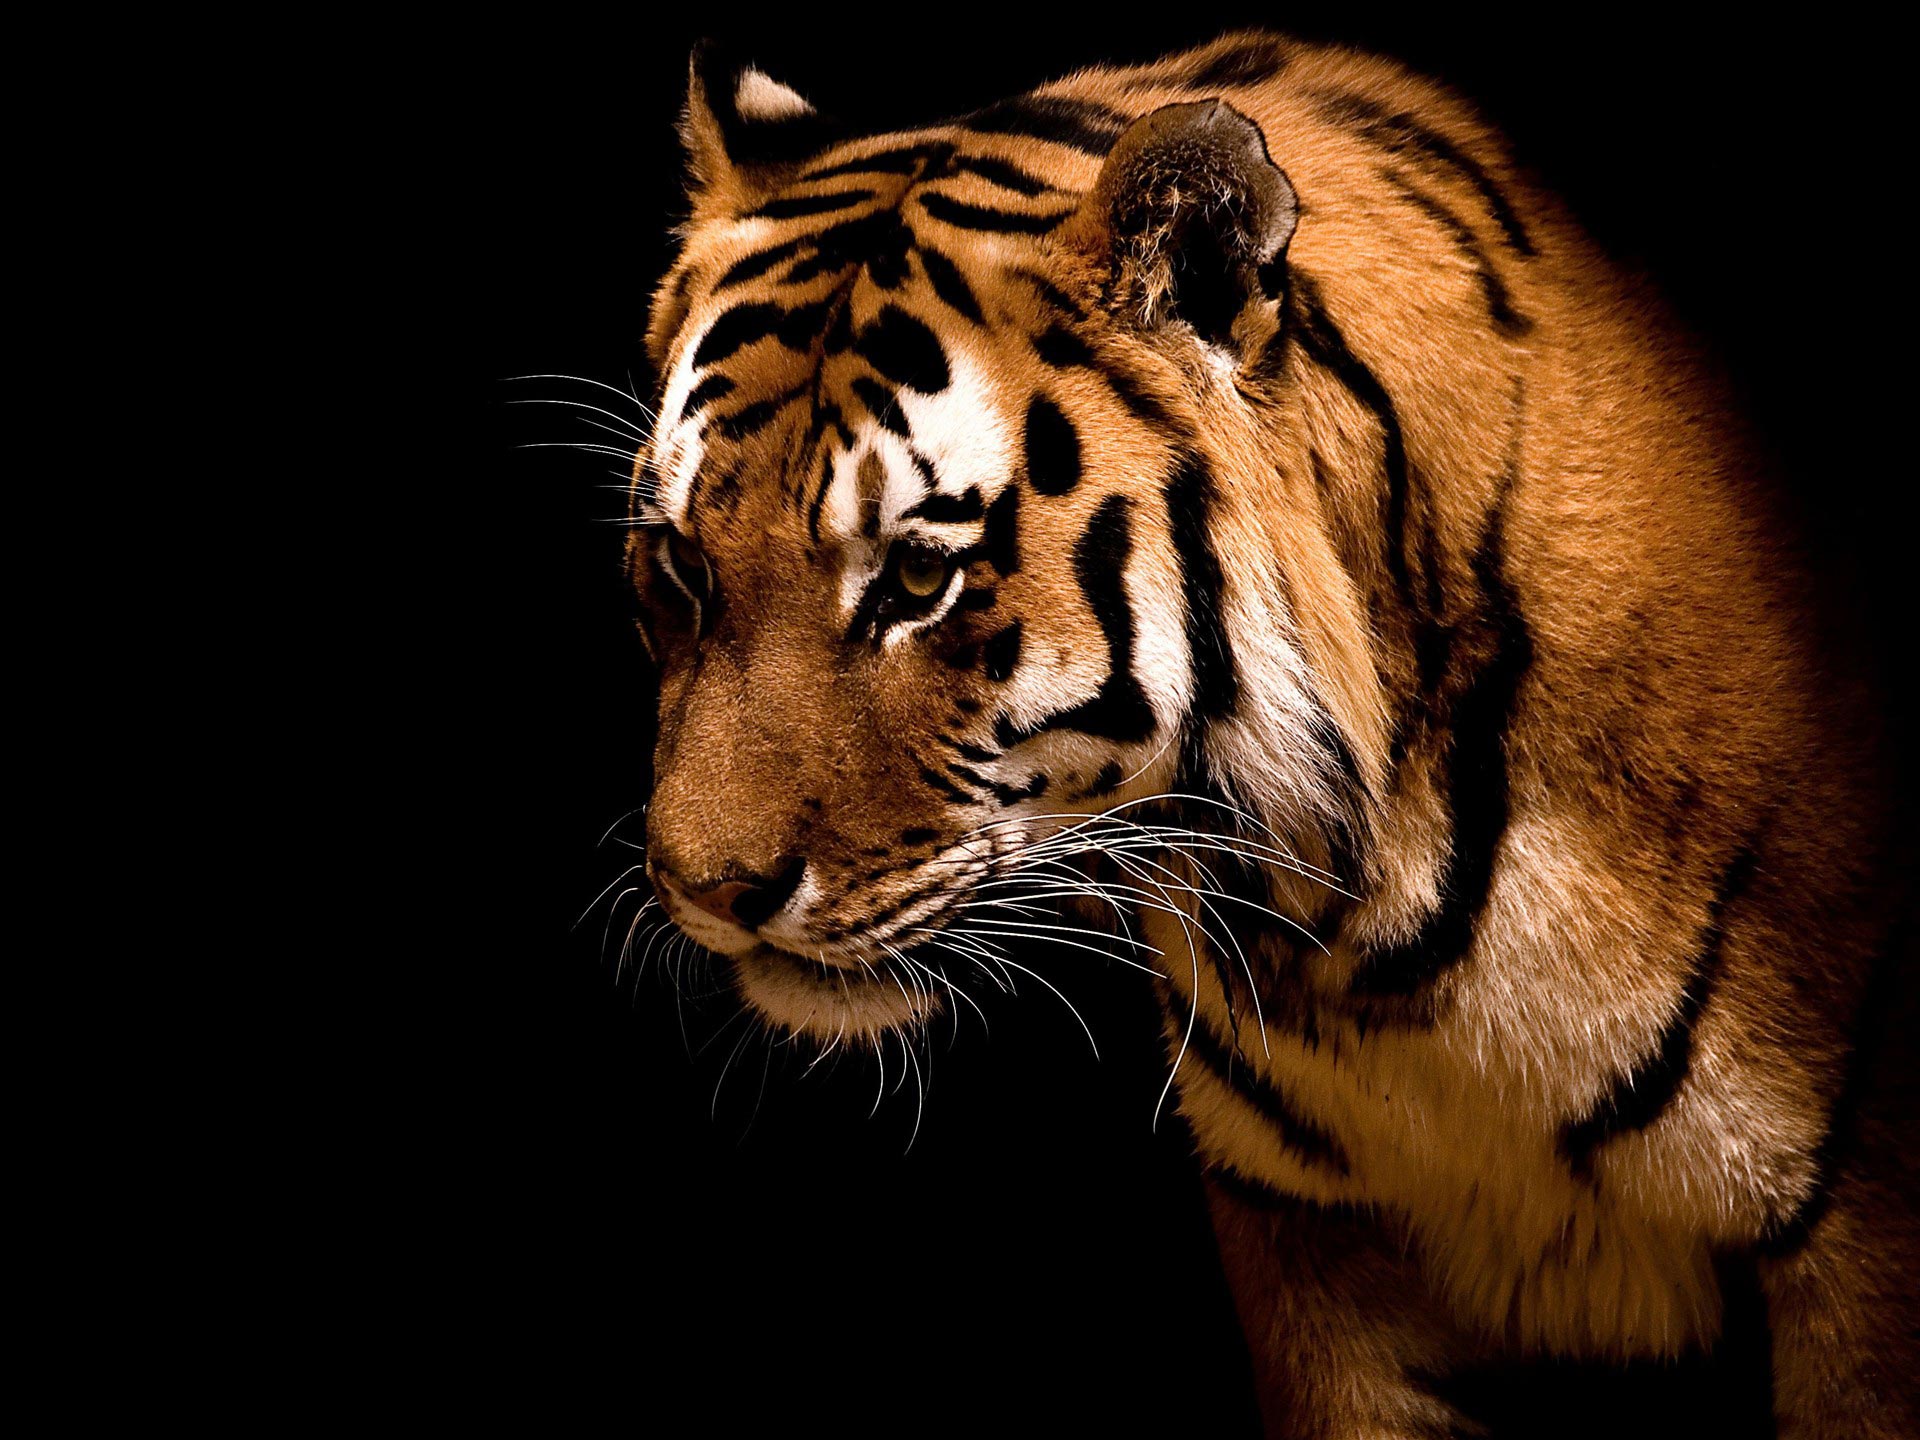 Hd Tiger Image Download